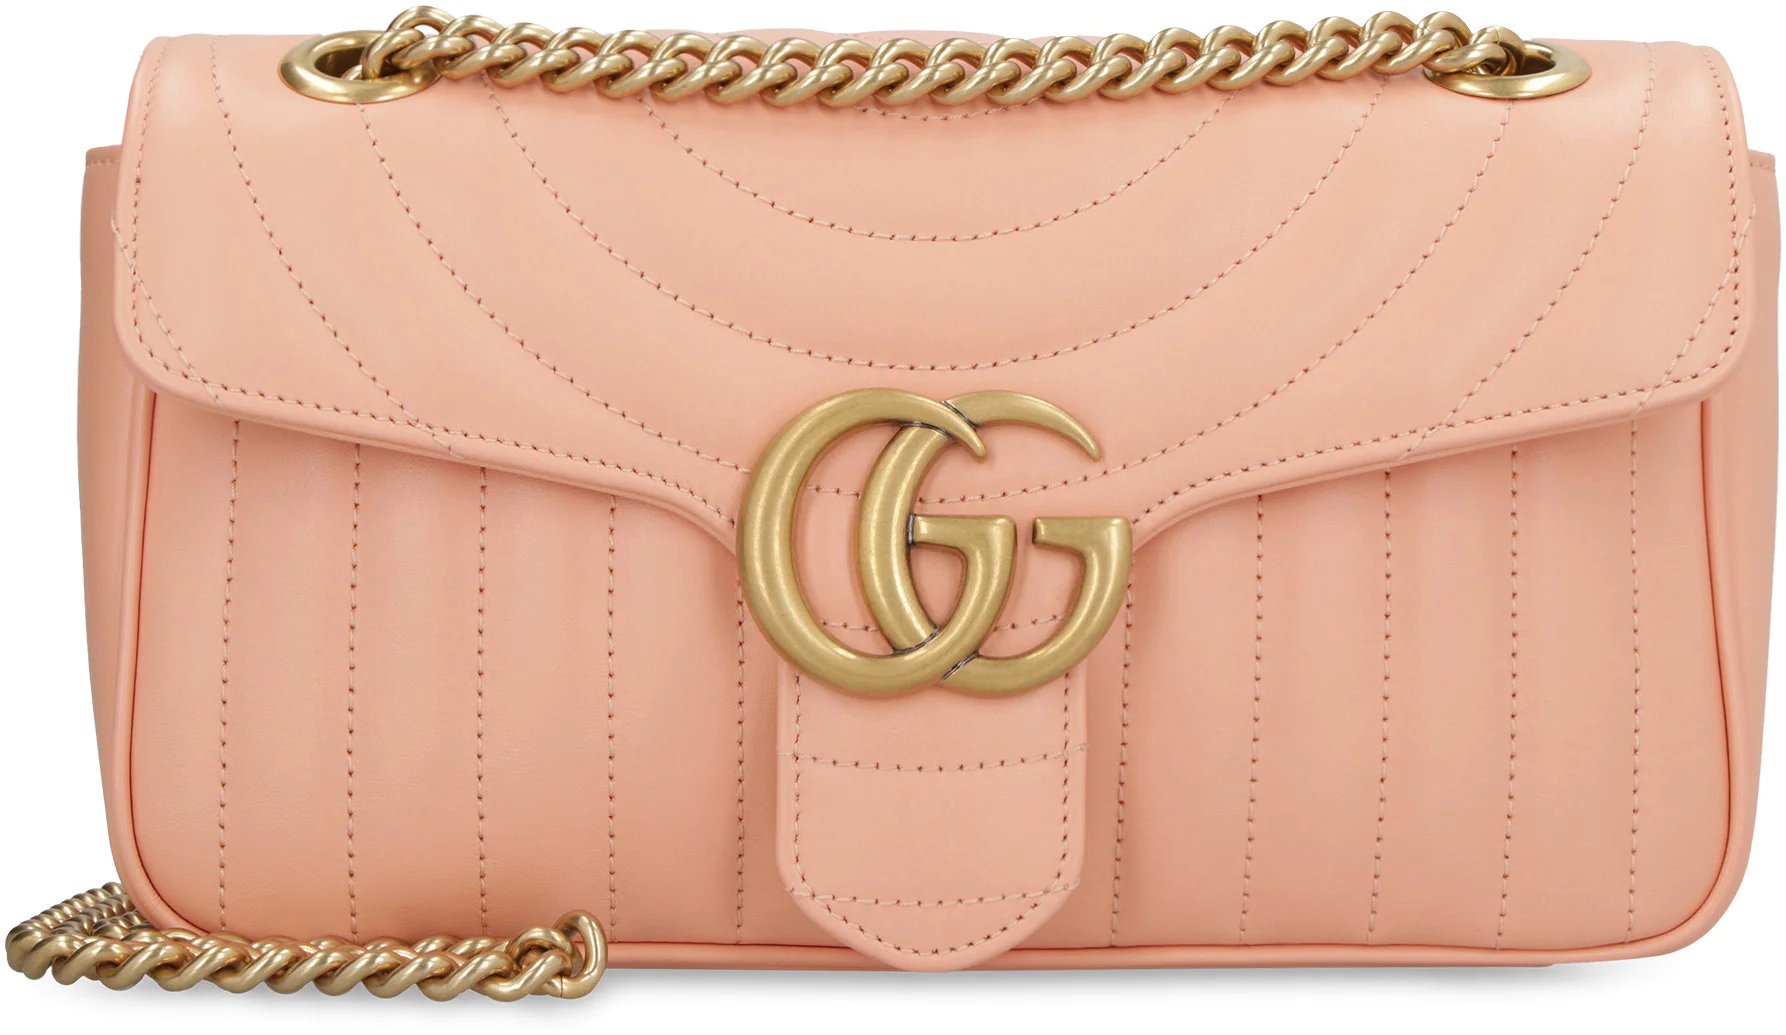 Gucci Marmont Leather Shoulder Bag